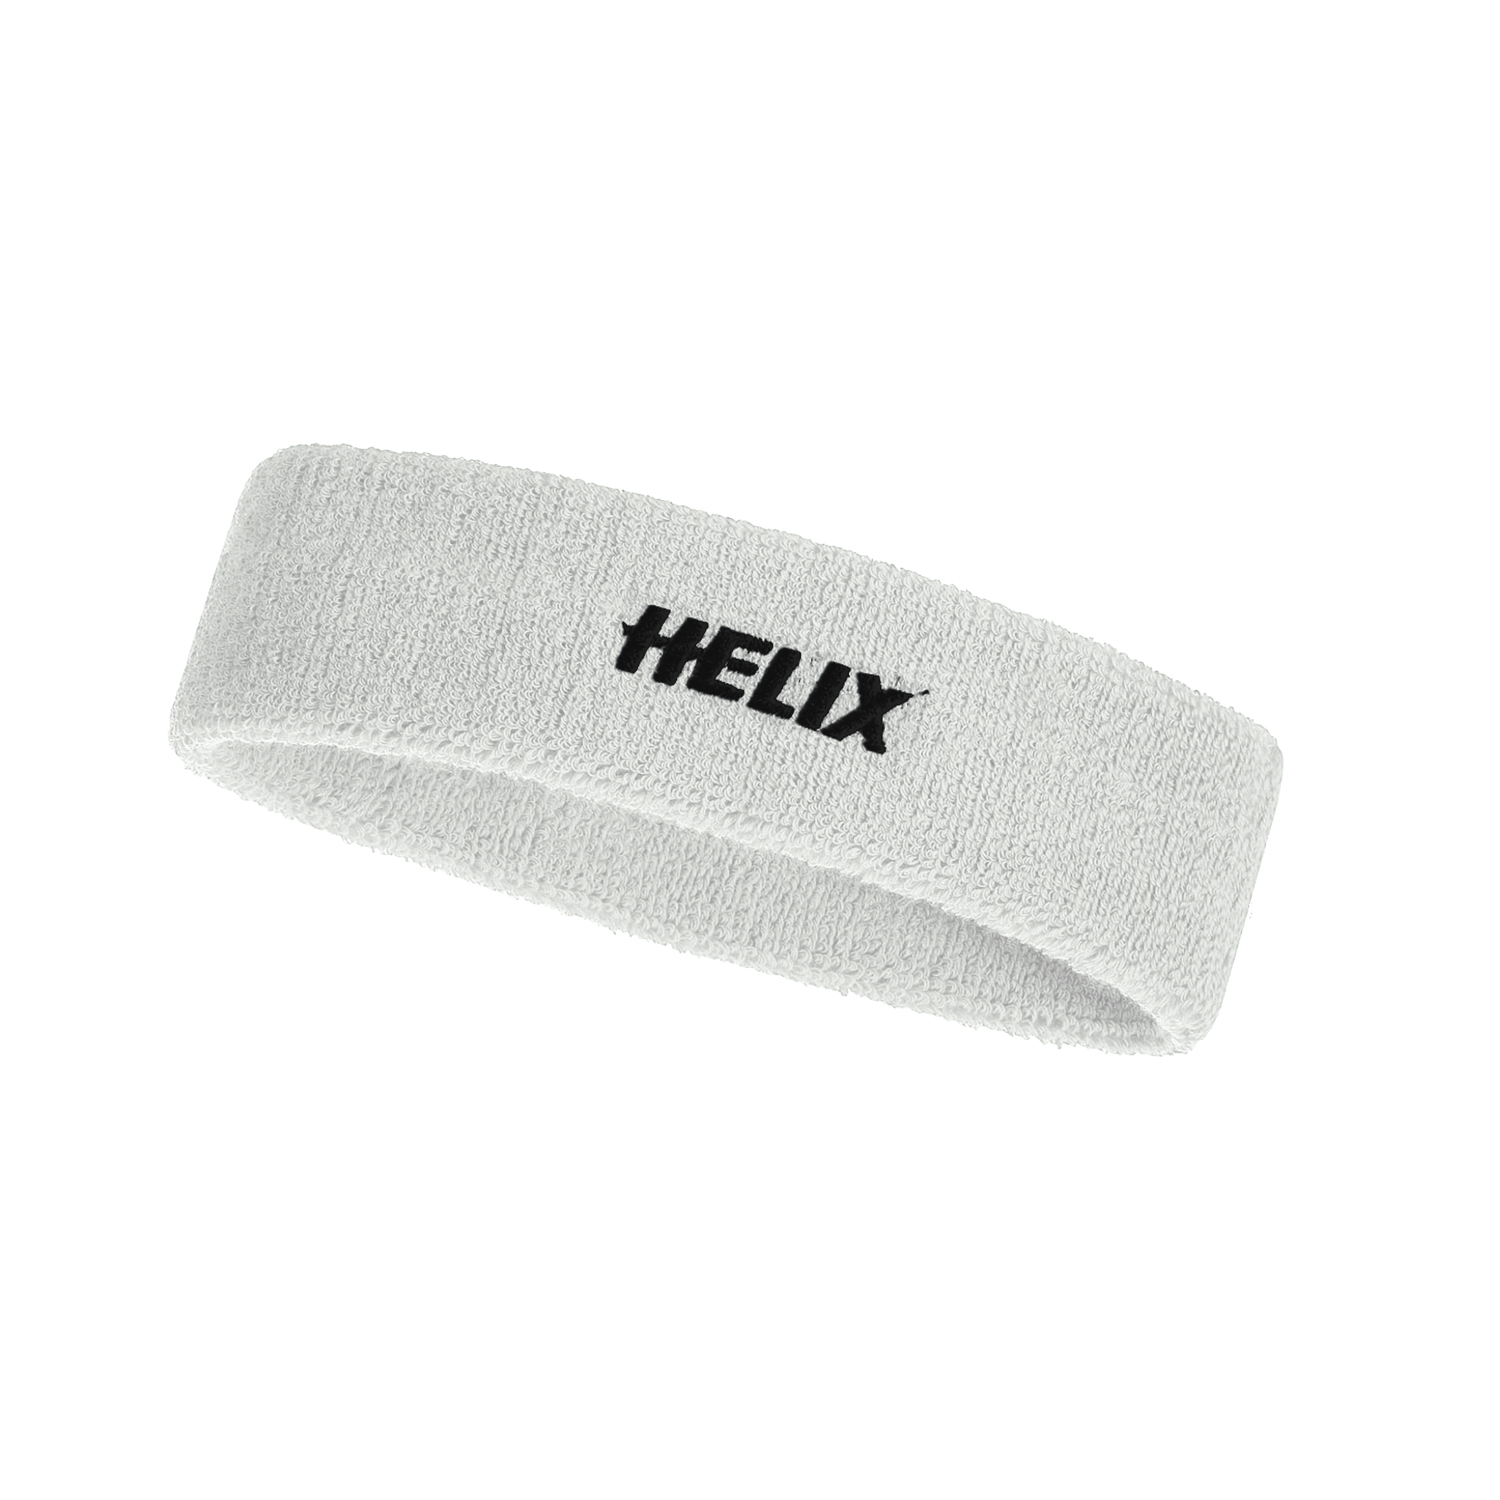 Helix Headband - White